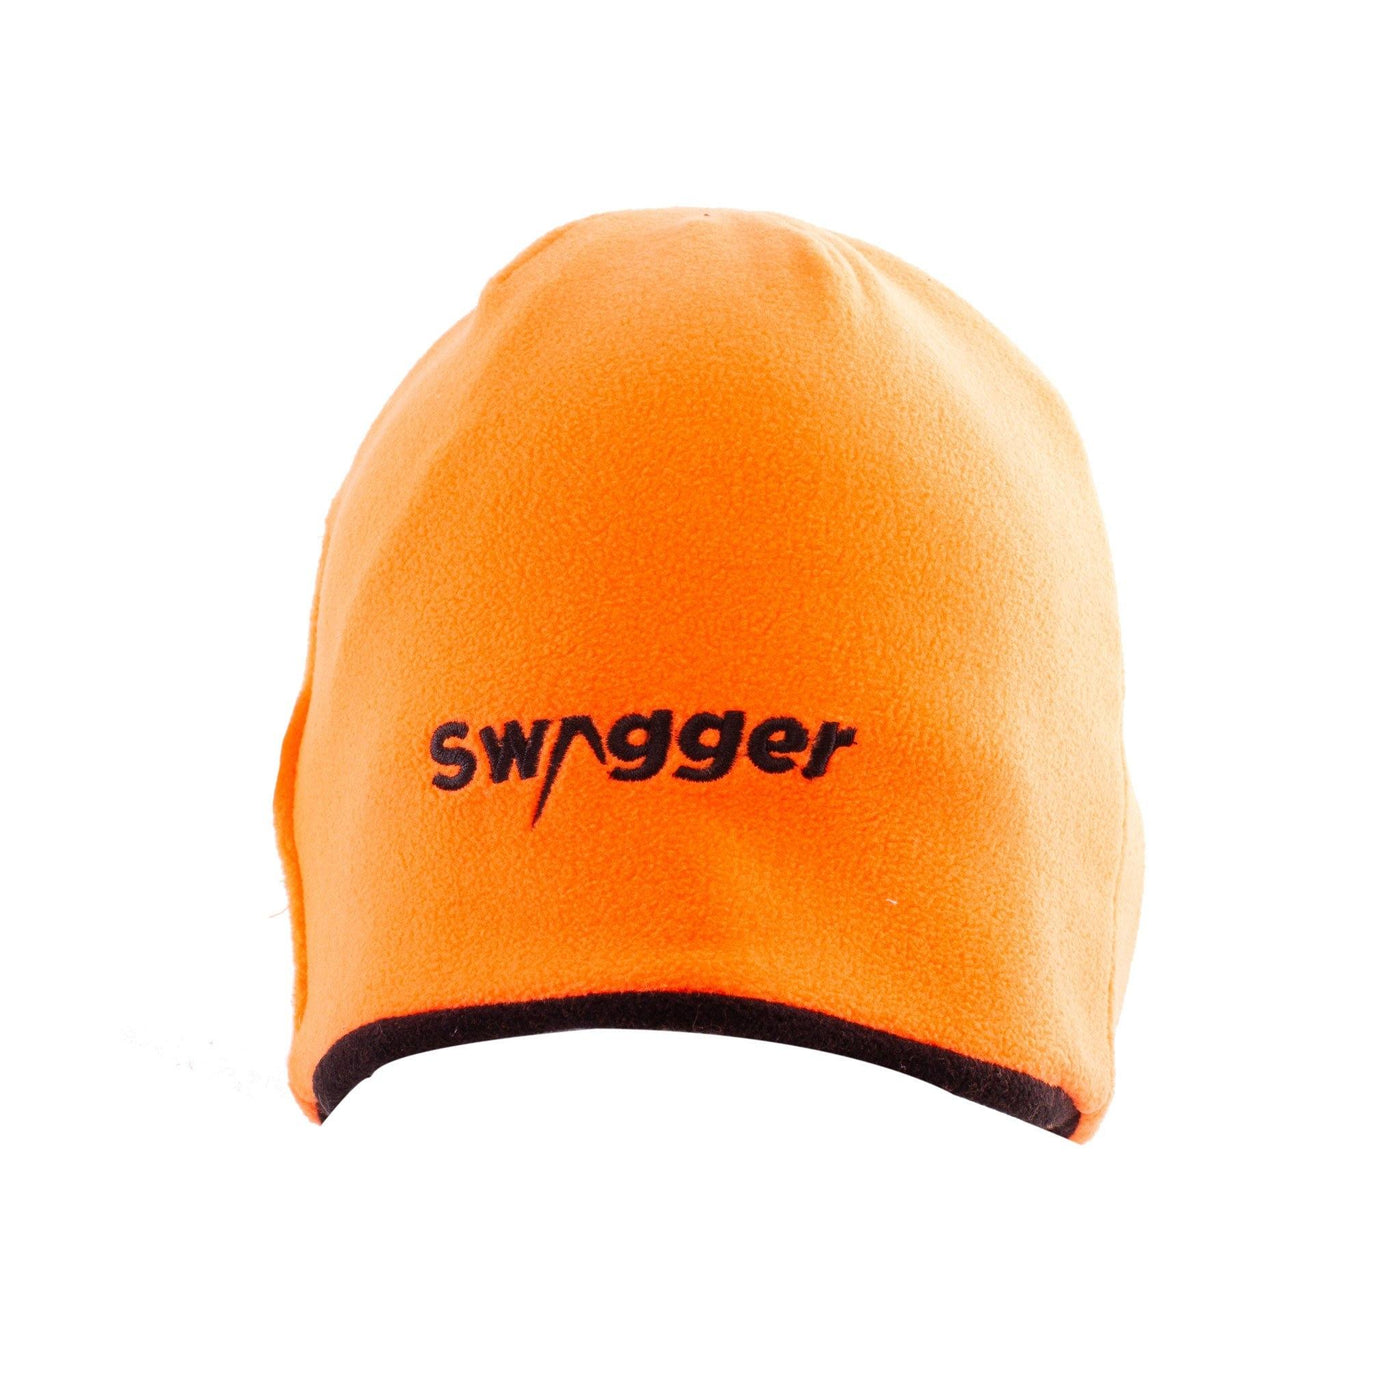 Swagger Bipod Reversible Beanie orange side